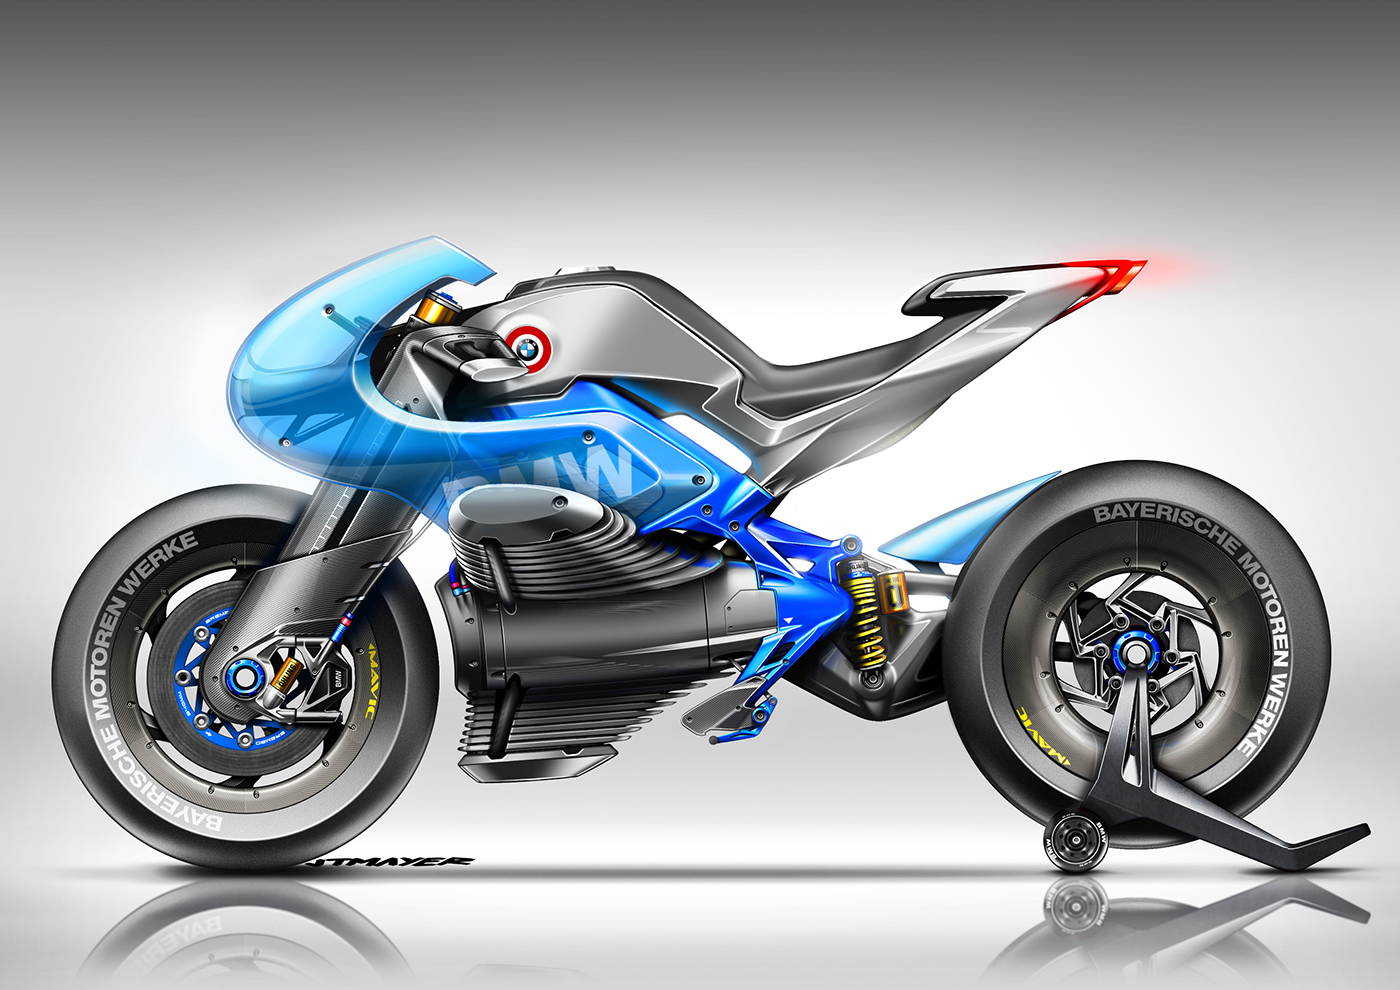 motorbike superbike race bike motorcycle motorcycle design